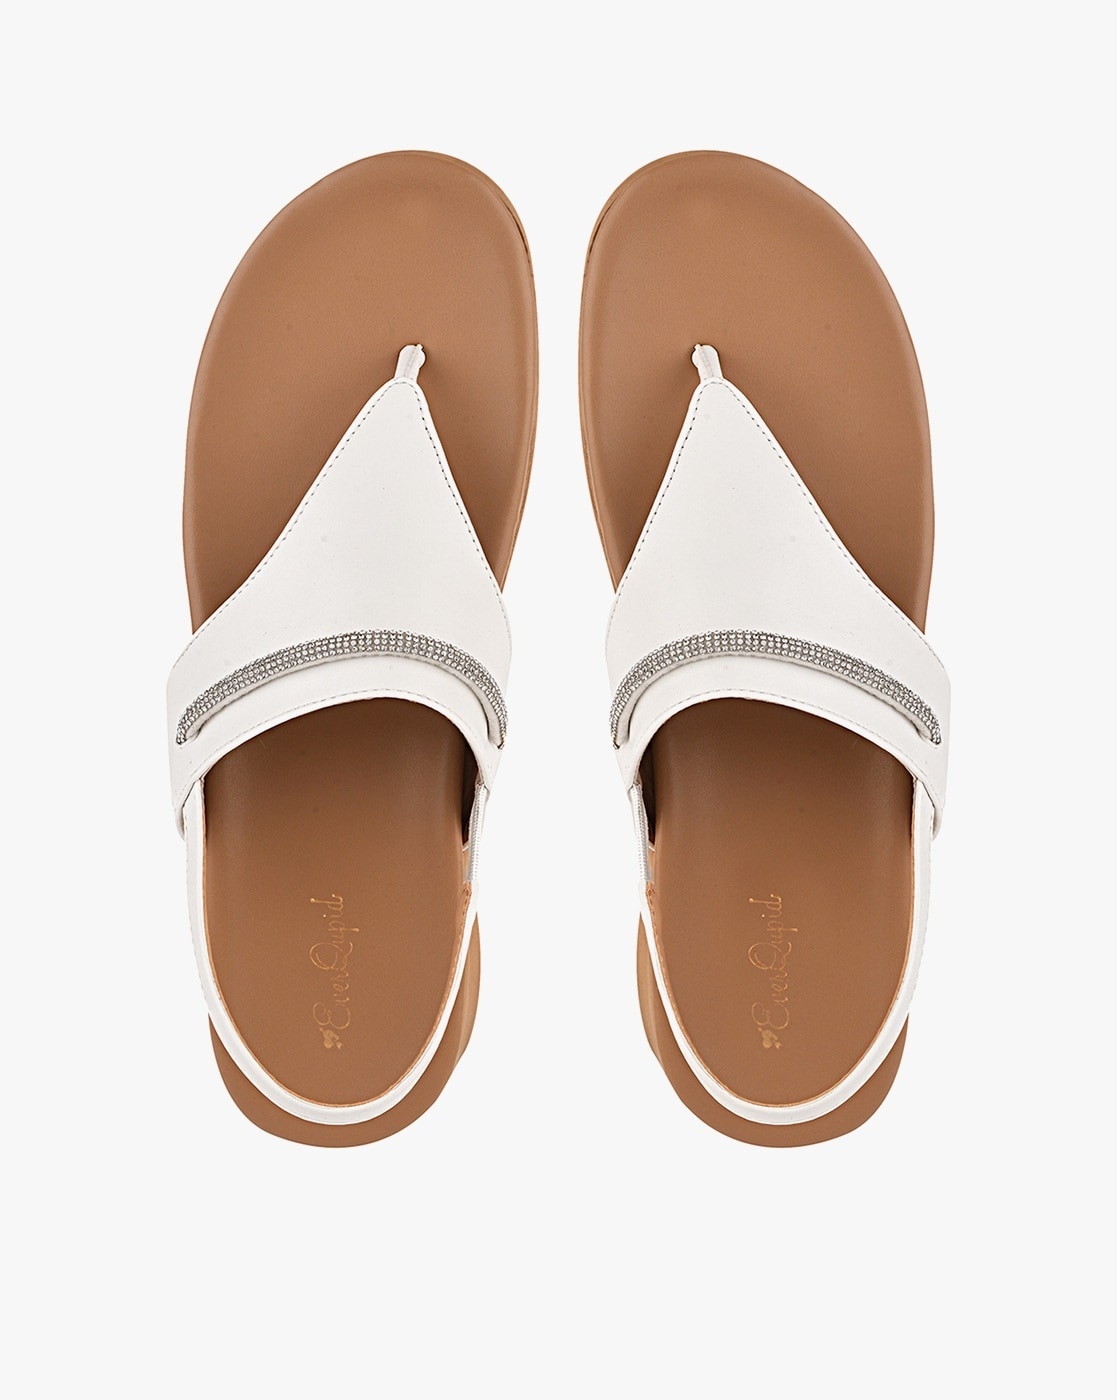 Buy Black Heeled Sandals for Women by ROCIA Online | Ajio.com